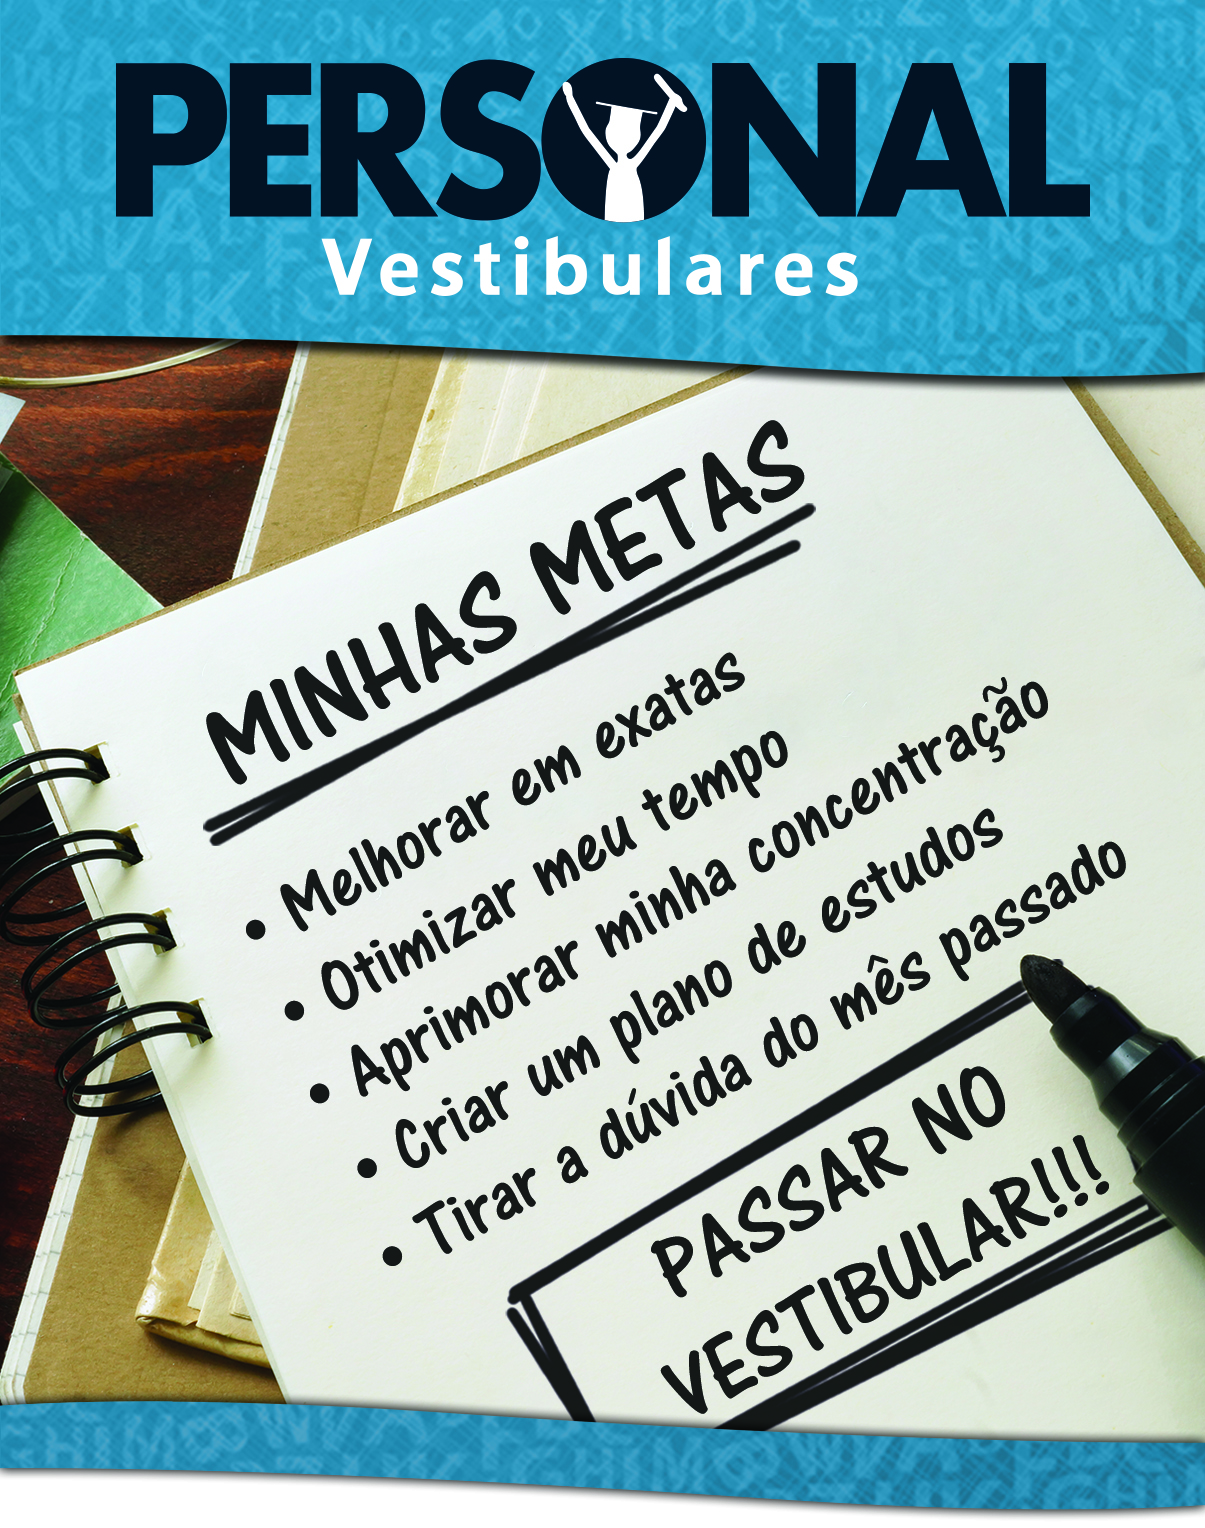 Personal Vestibulares - Acompanhamento Individual em So Paulo